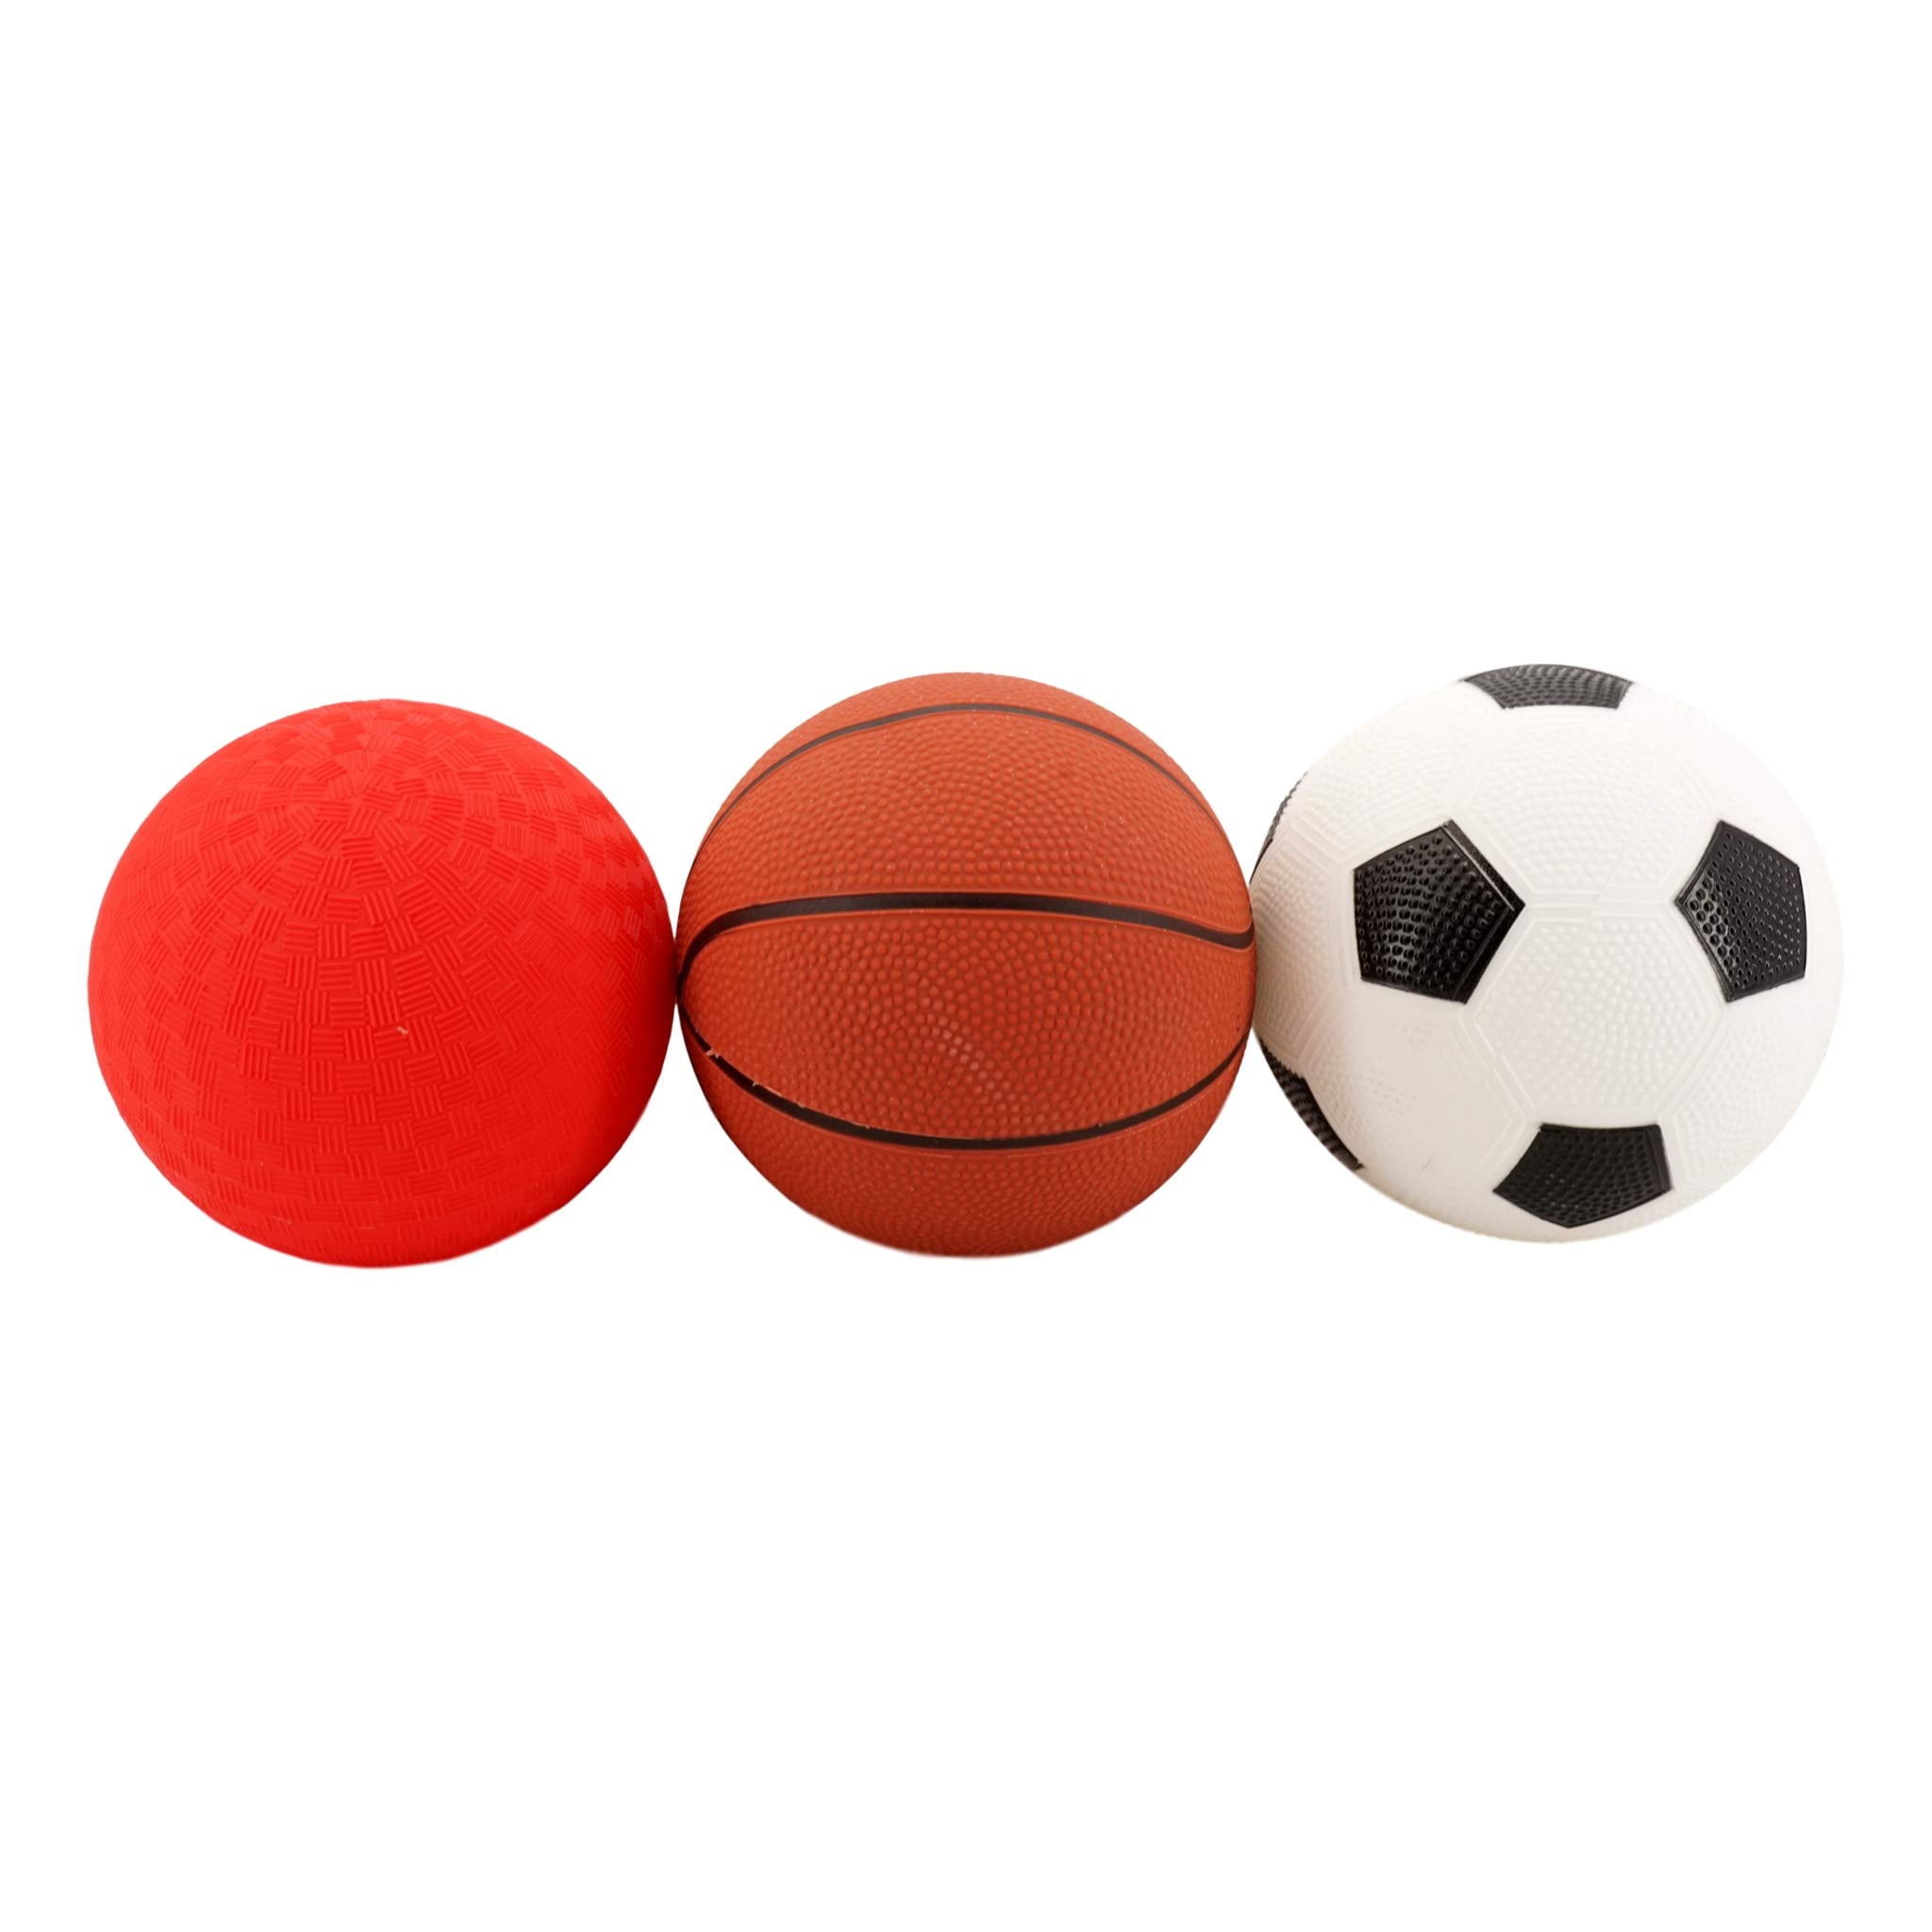 Kids Stuff Mini Sports Balls (3 Pack, 5 inches Diameter Each) 1 Soccer ...